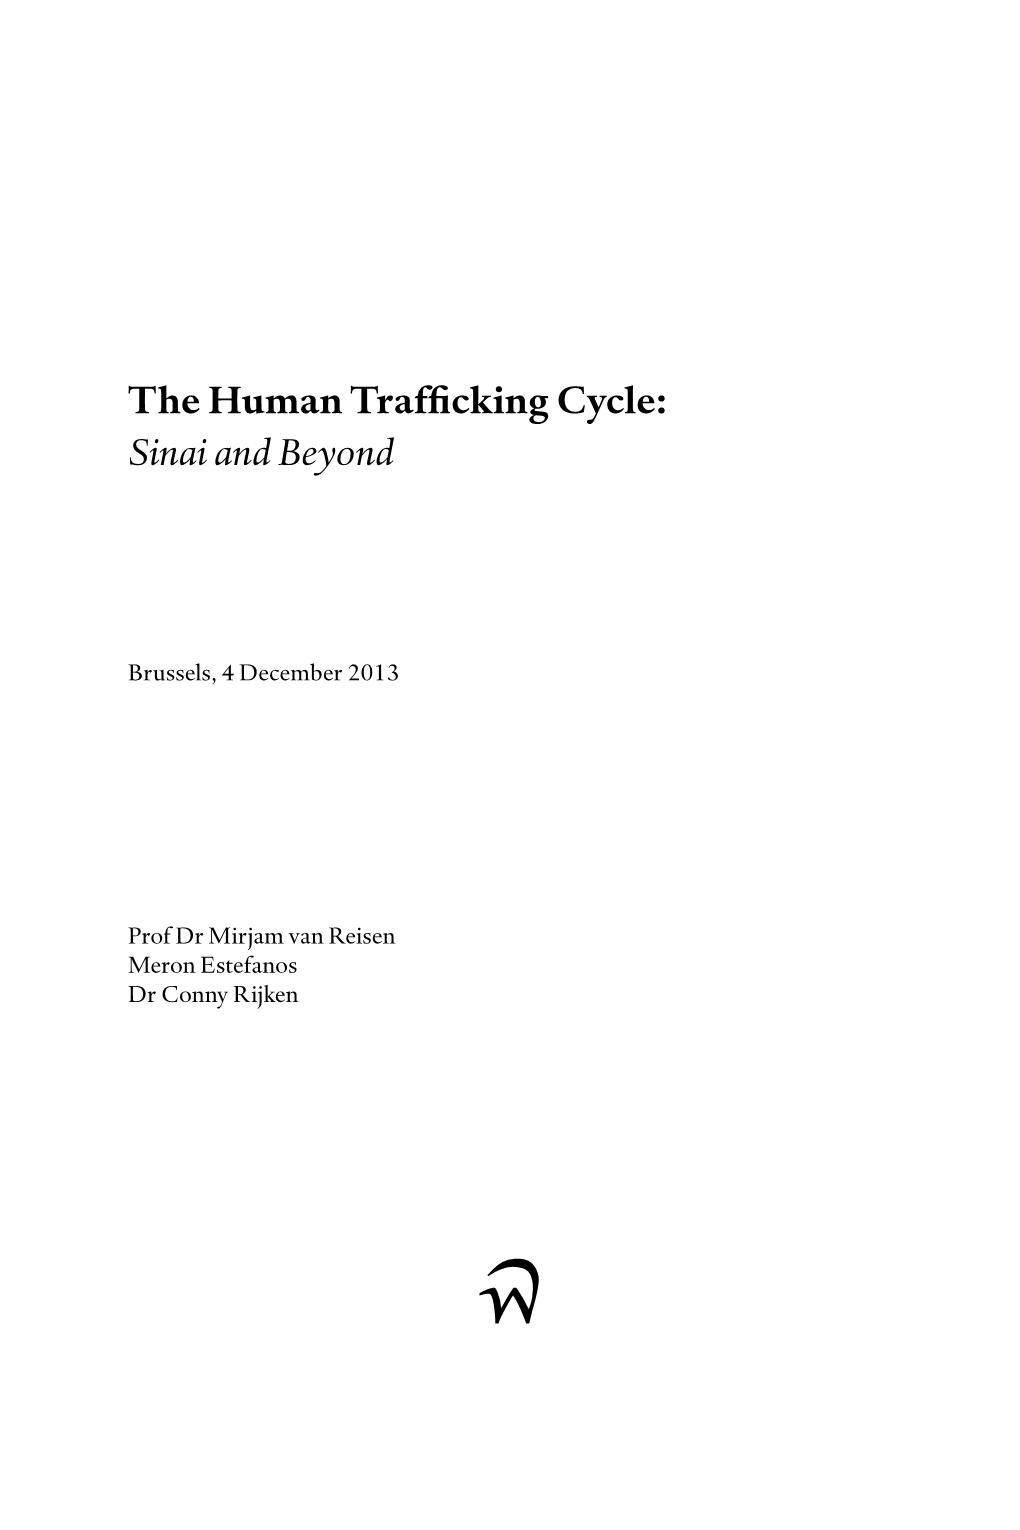 The Human Trafficking Cycle: Sinai and Beyond